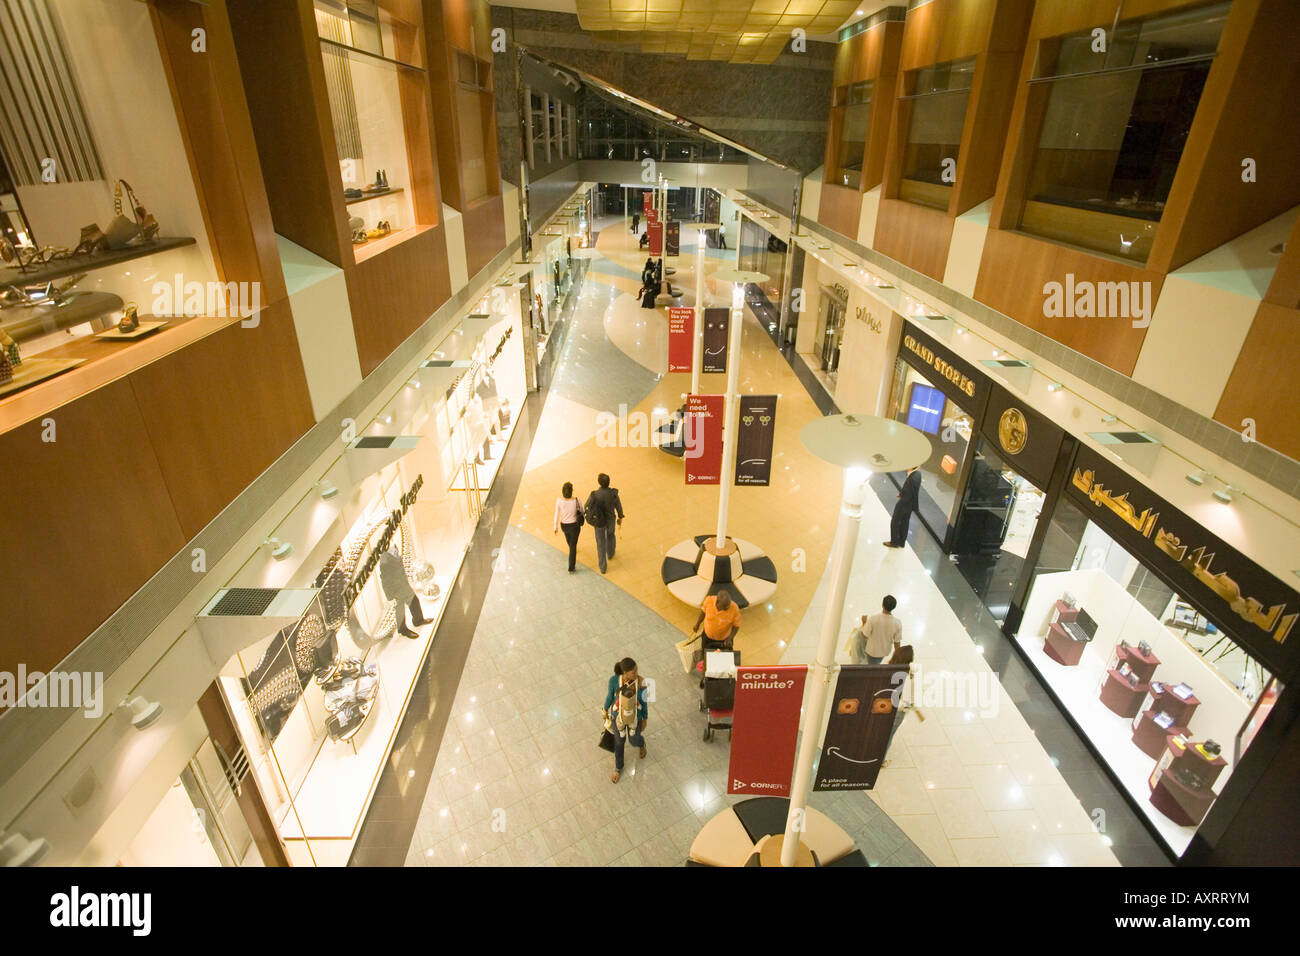 Dubai Sheikh Zayed Road Emirates towers Shopping Mall Stock Photo